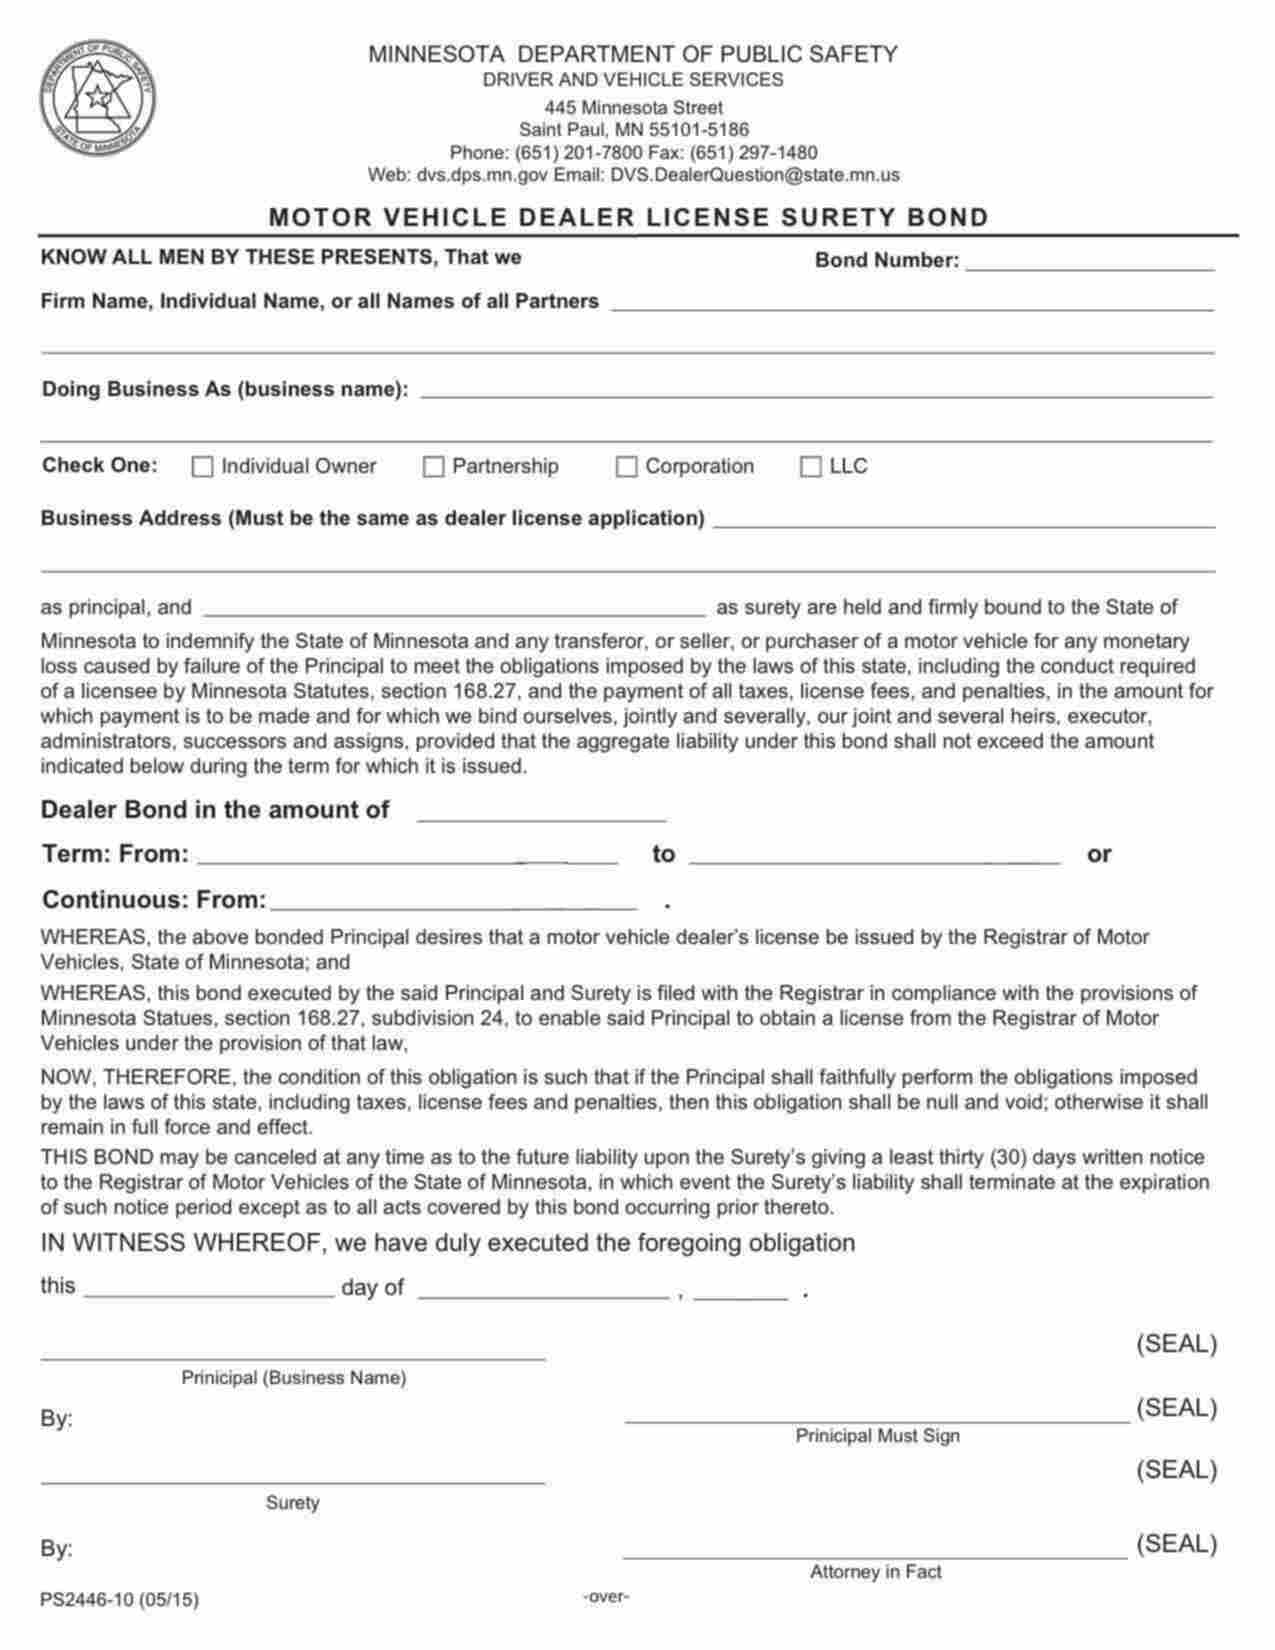 Minnesota Motor Vehicle Dealer - Partnership Bond Form